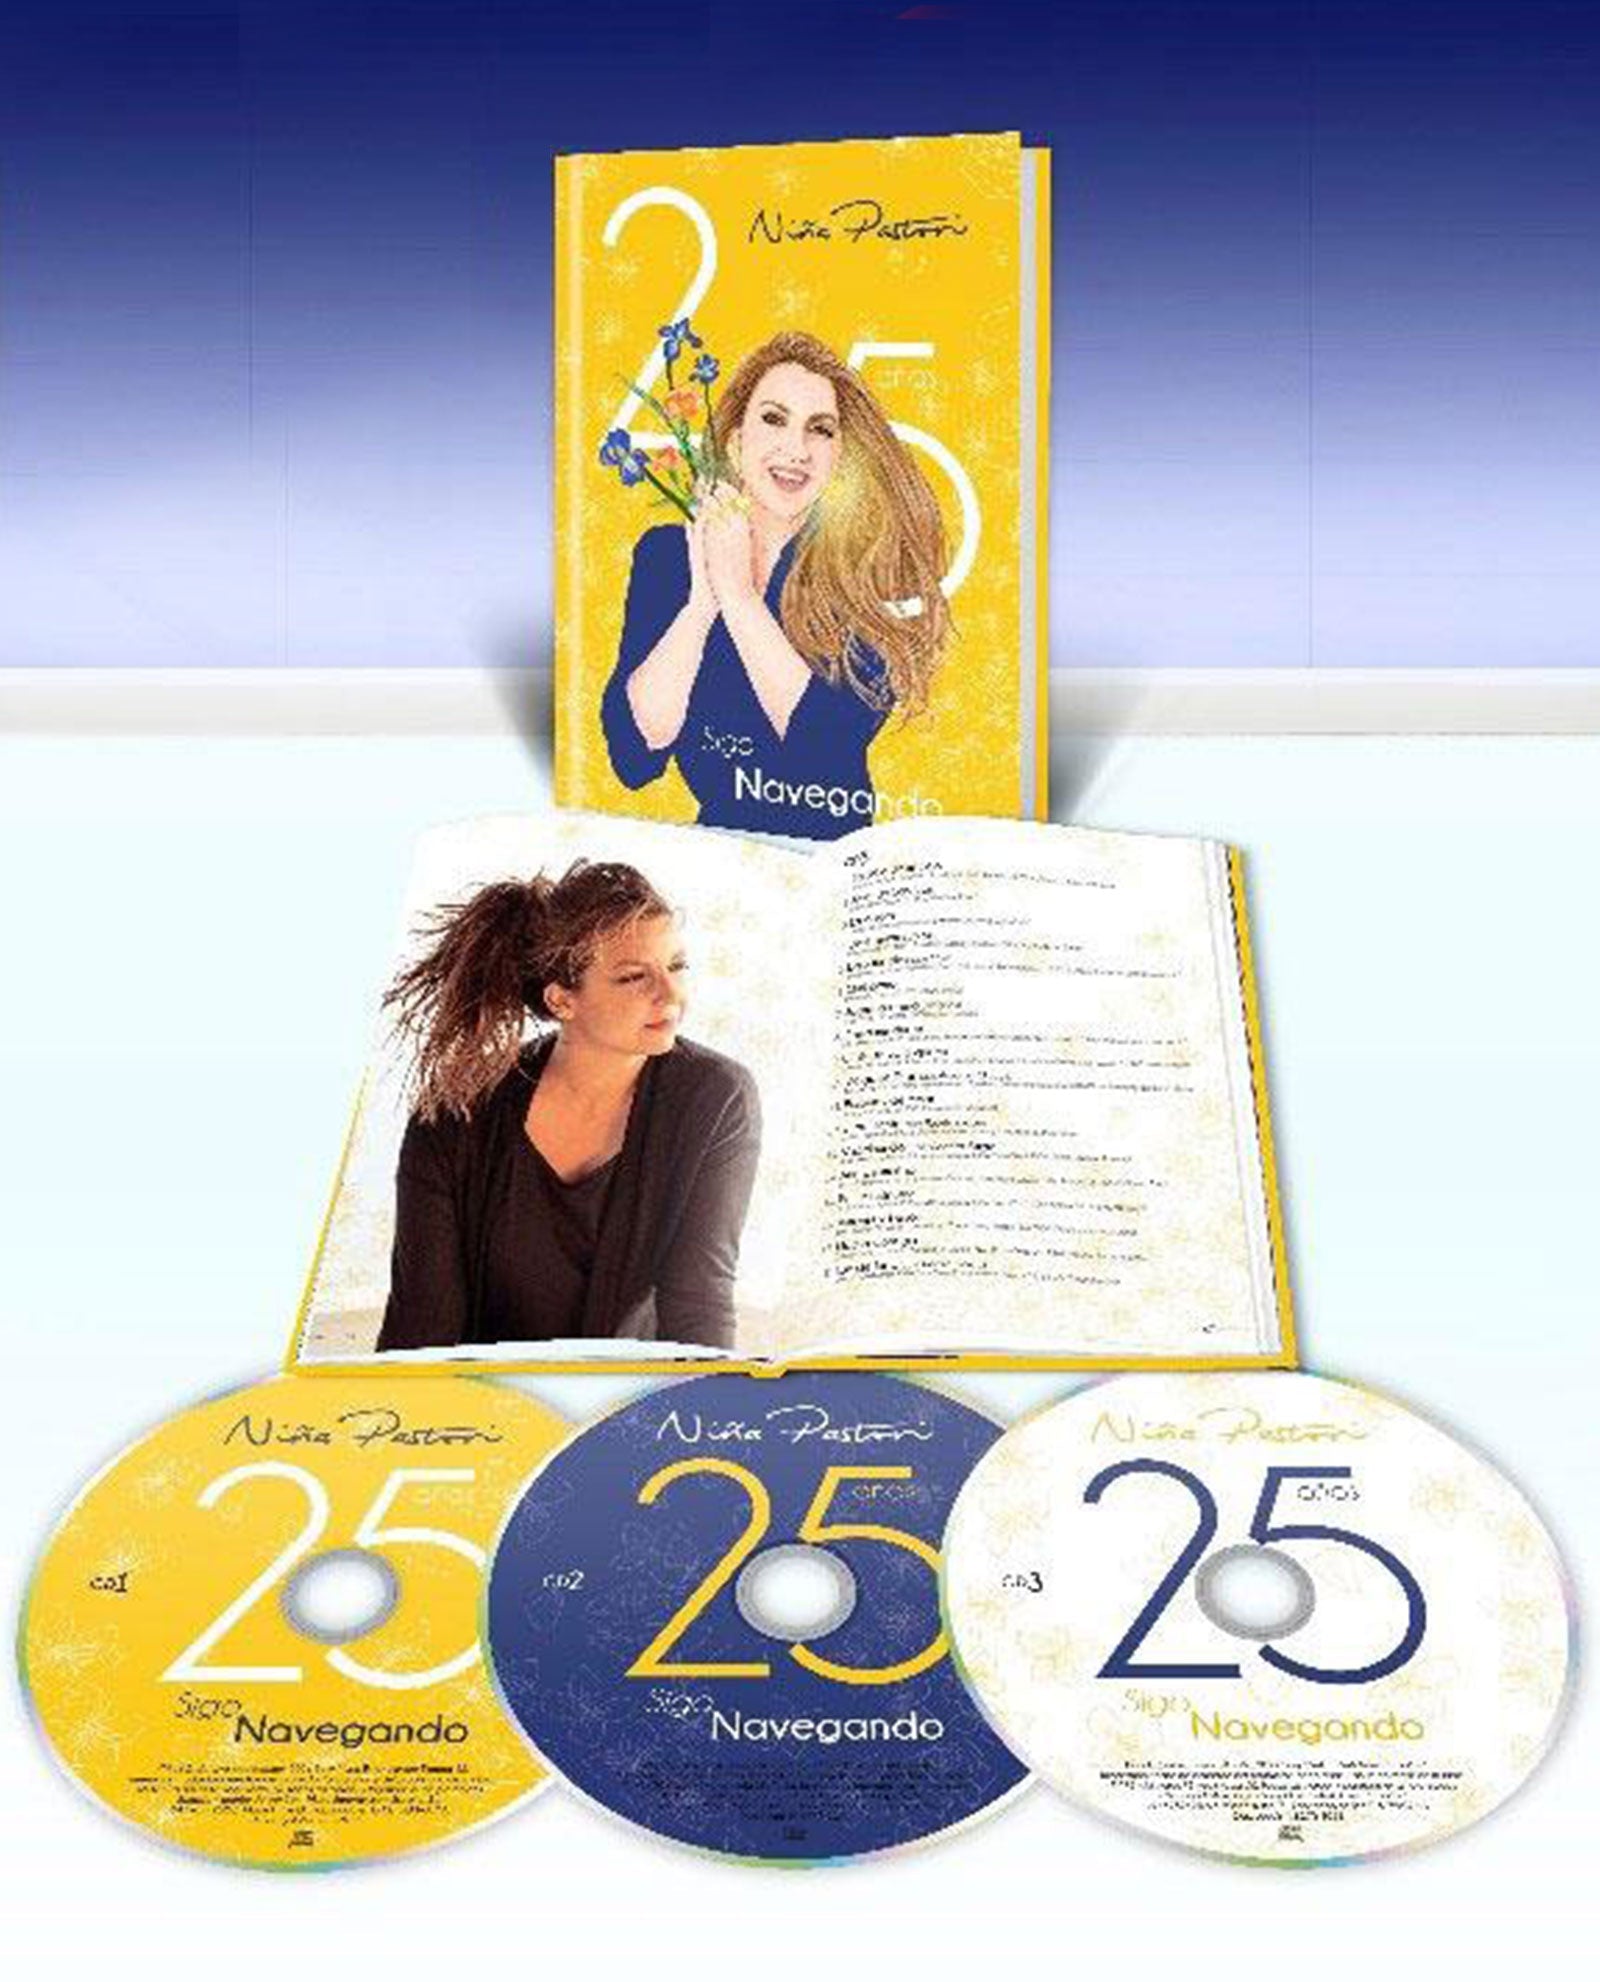 Niña Pastori - Bookset 3CDS ¡FIRMADO! "Sigo navegando (25 años)" - D2fy - D2fy